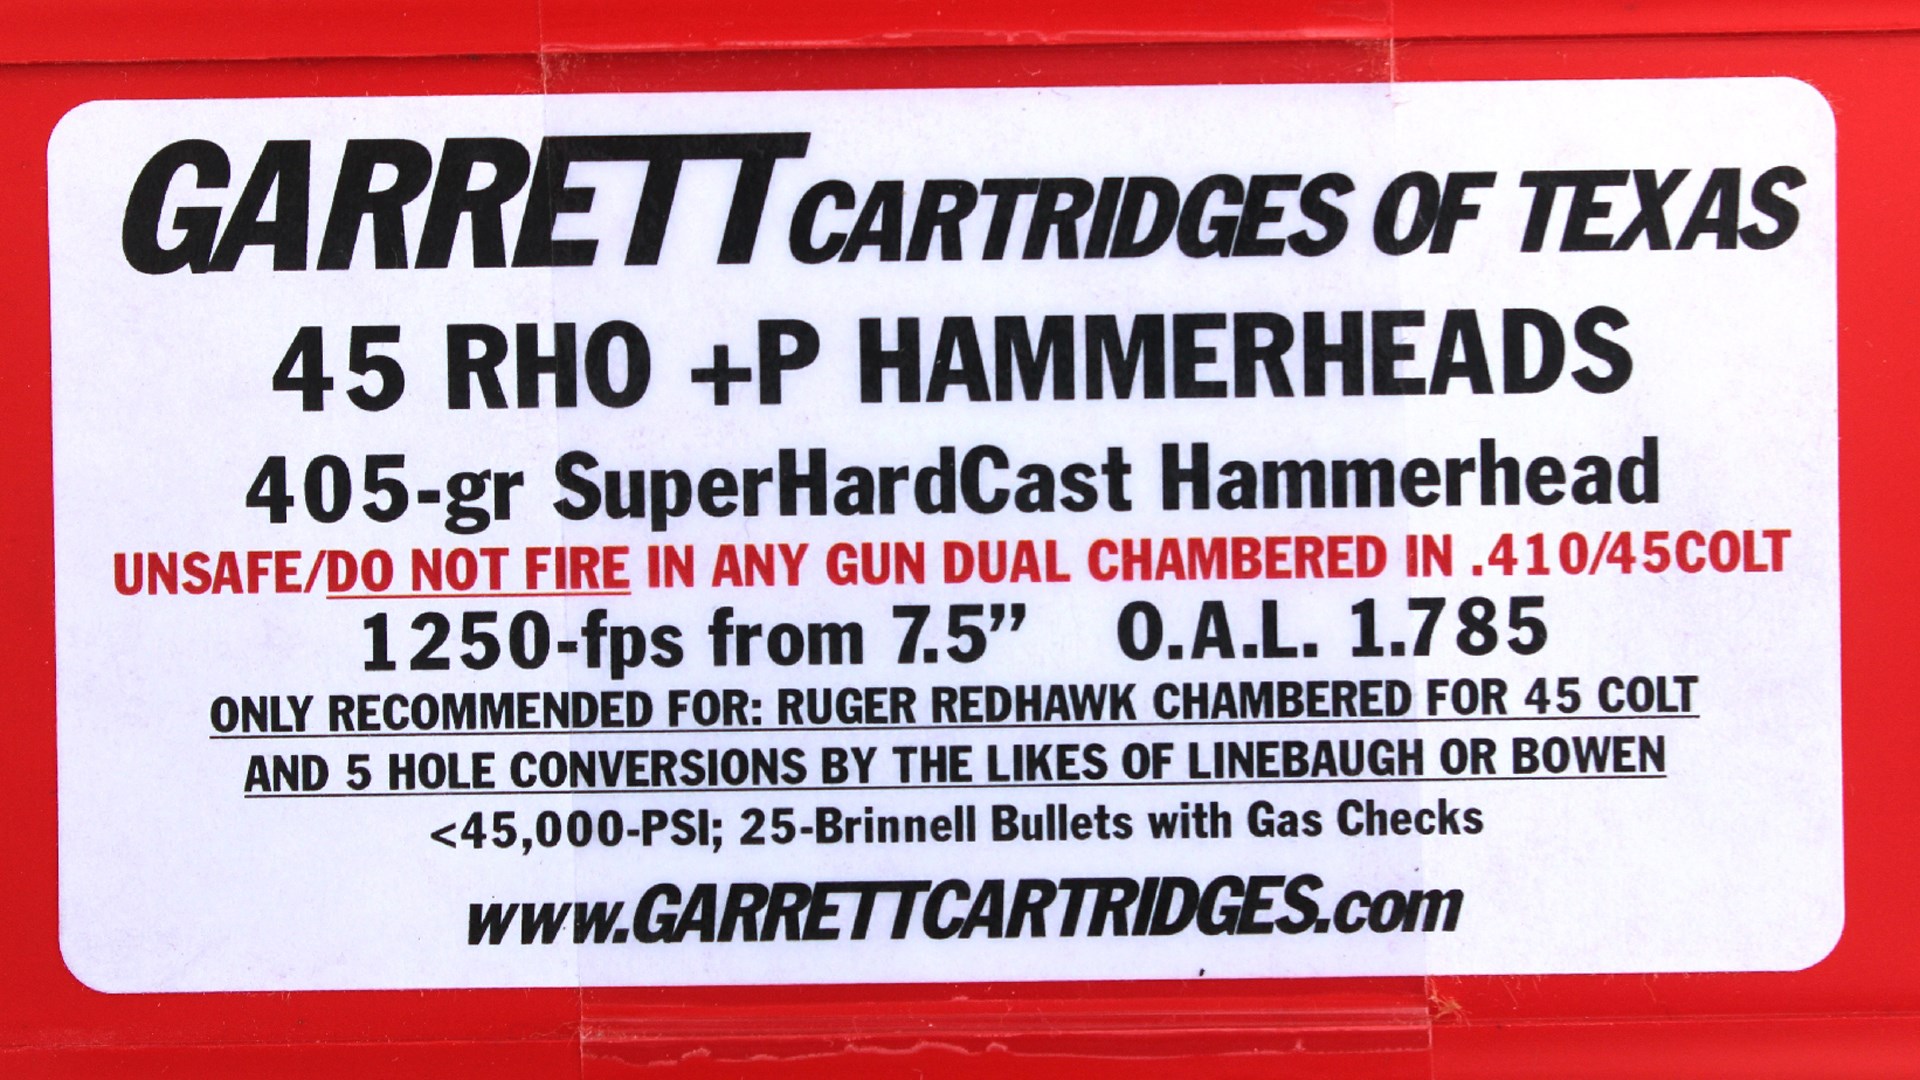 garrett cartridges of texas warning label